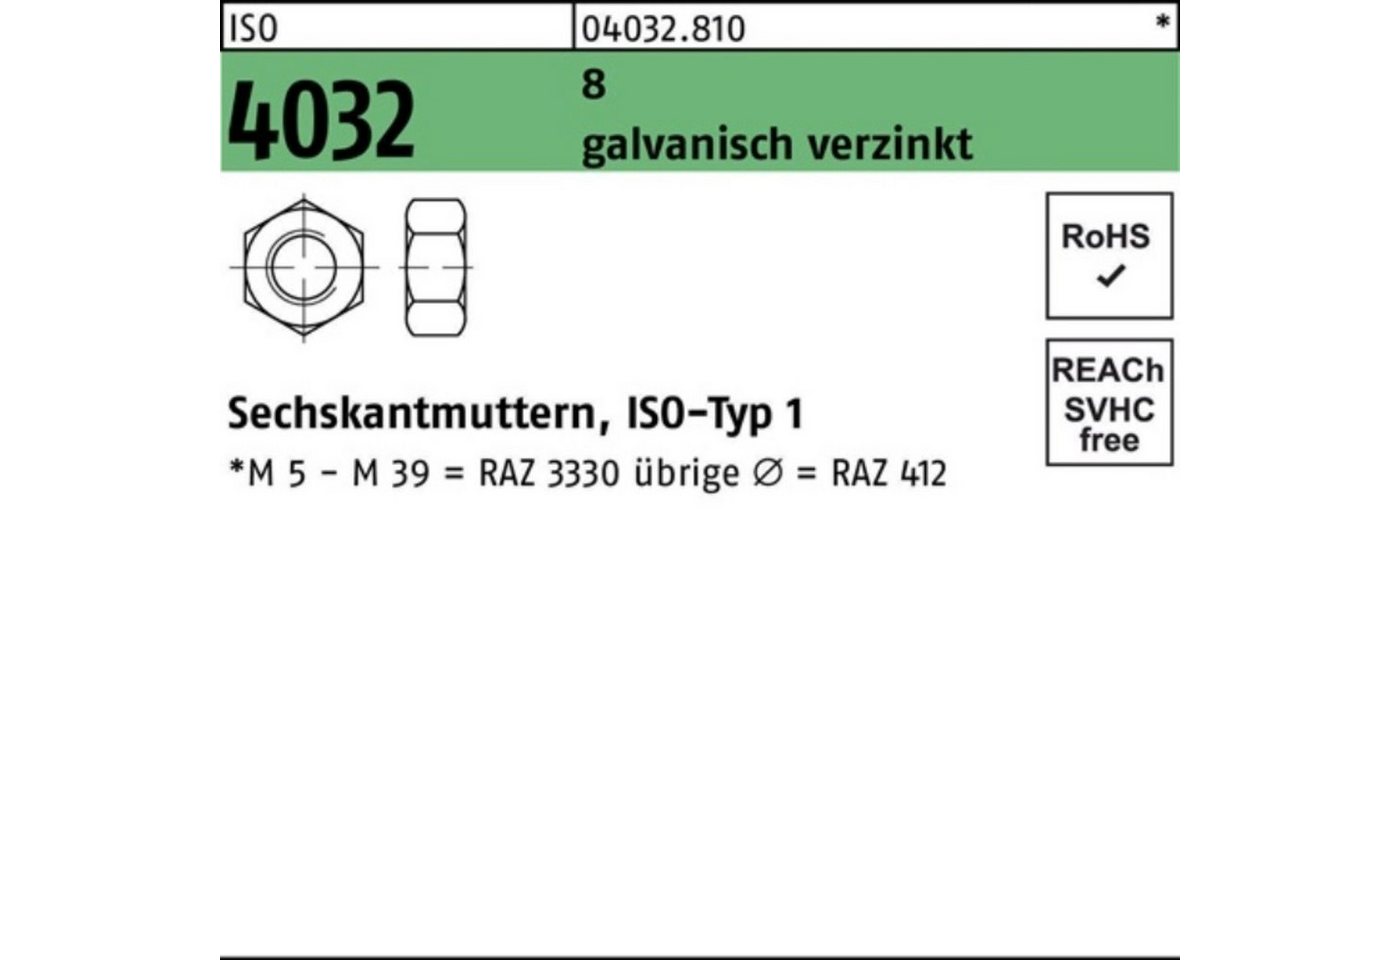 Bufab Muttern 100er Pack Sechskantmutter ISO 4032 M18 8 galv.verz. 100 Stück ISO 40 von Bufab